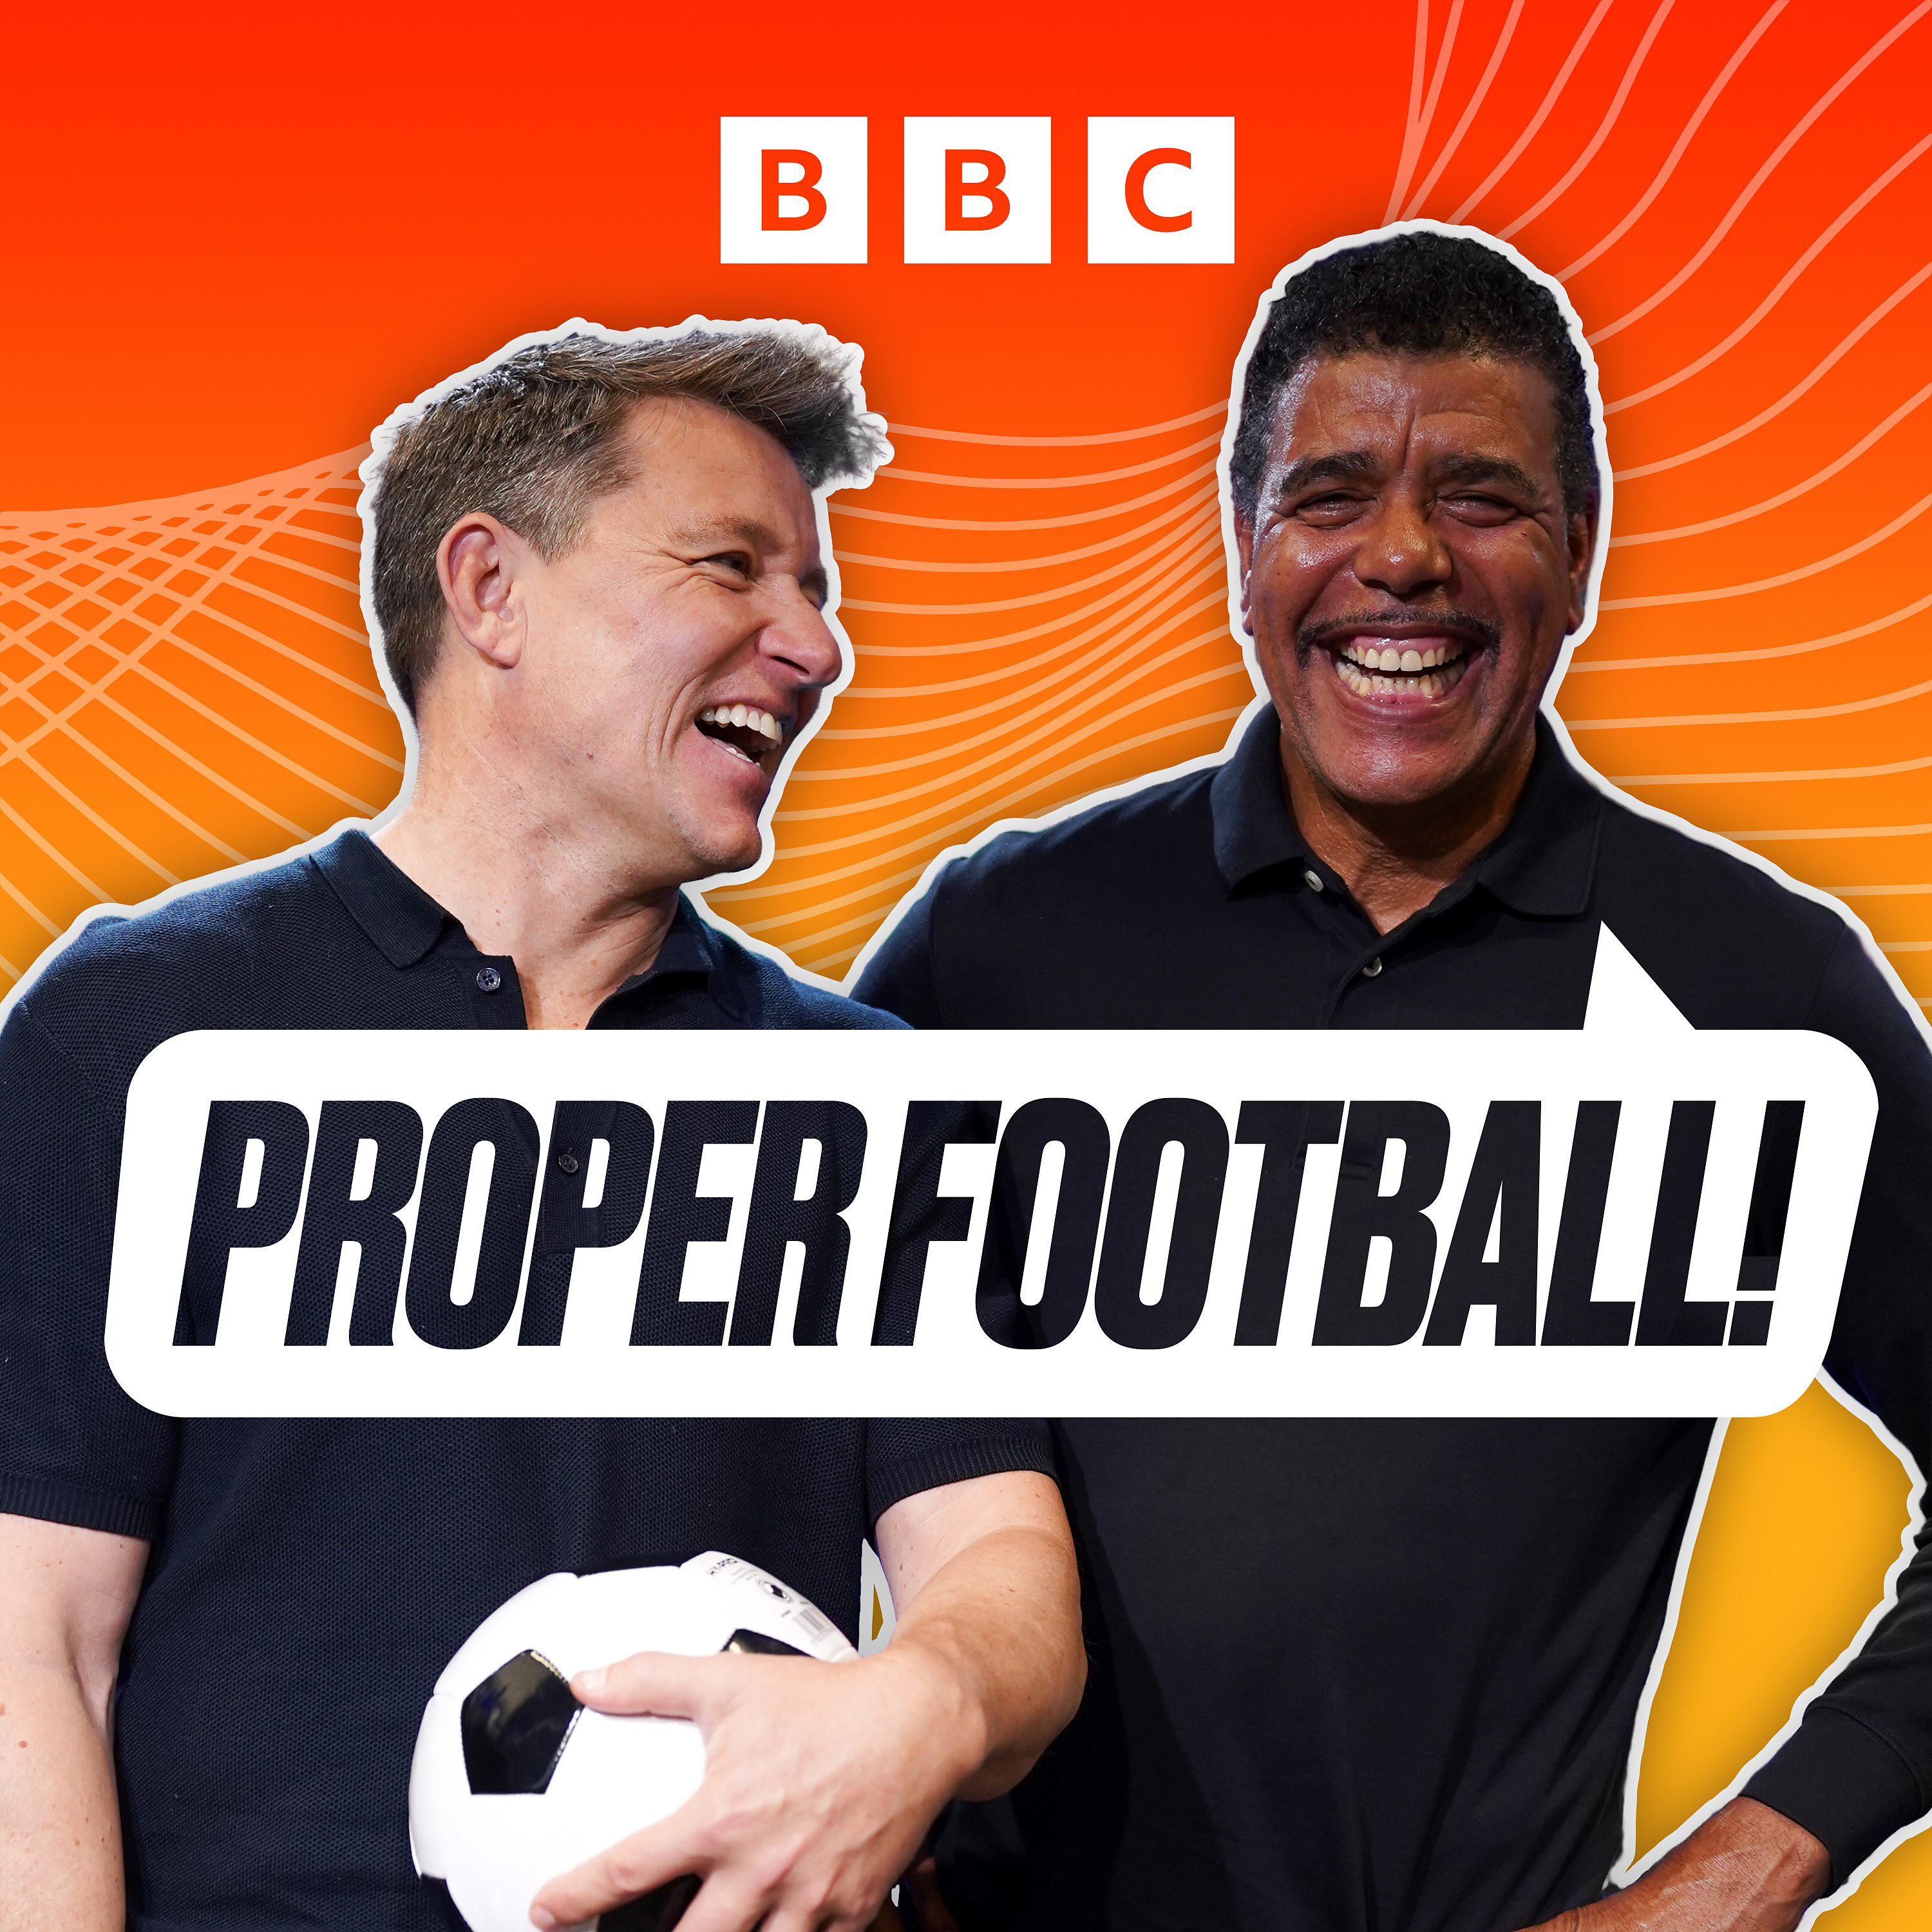 Kammy & Ben's Proper Football Podcast podcast show image